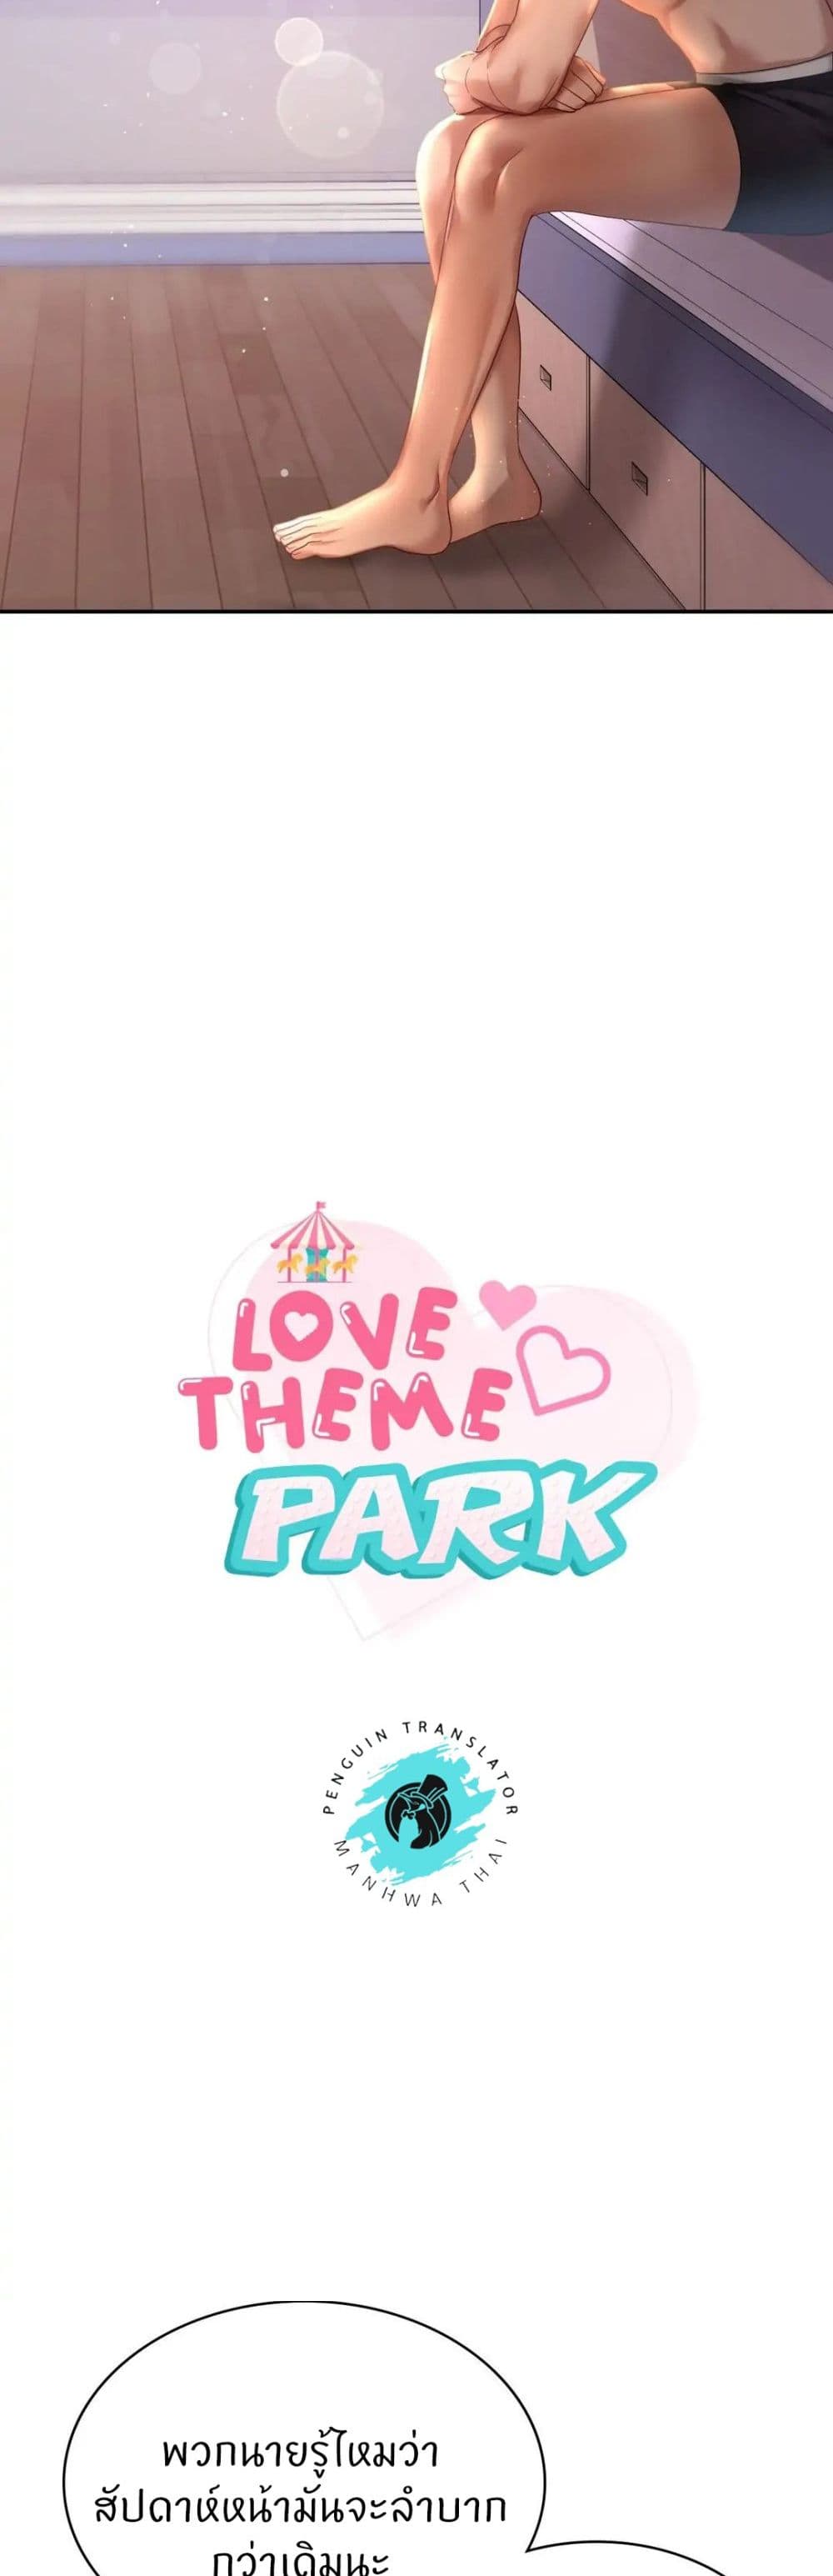 Love Theme Park 8-8